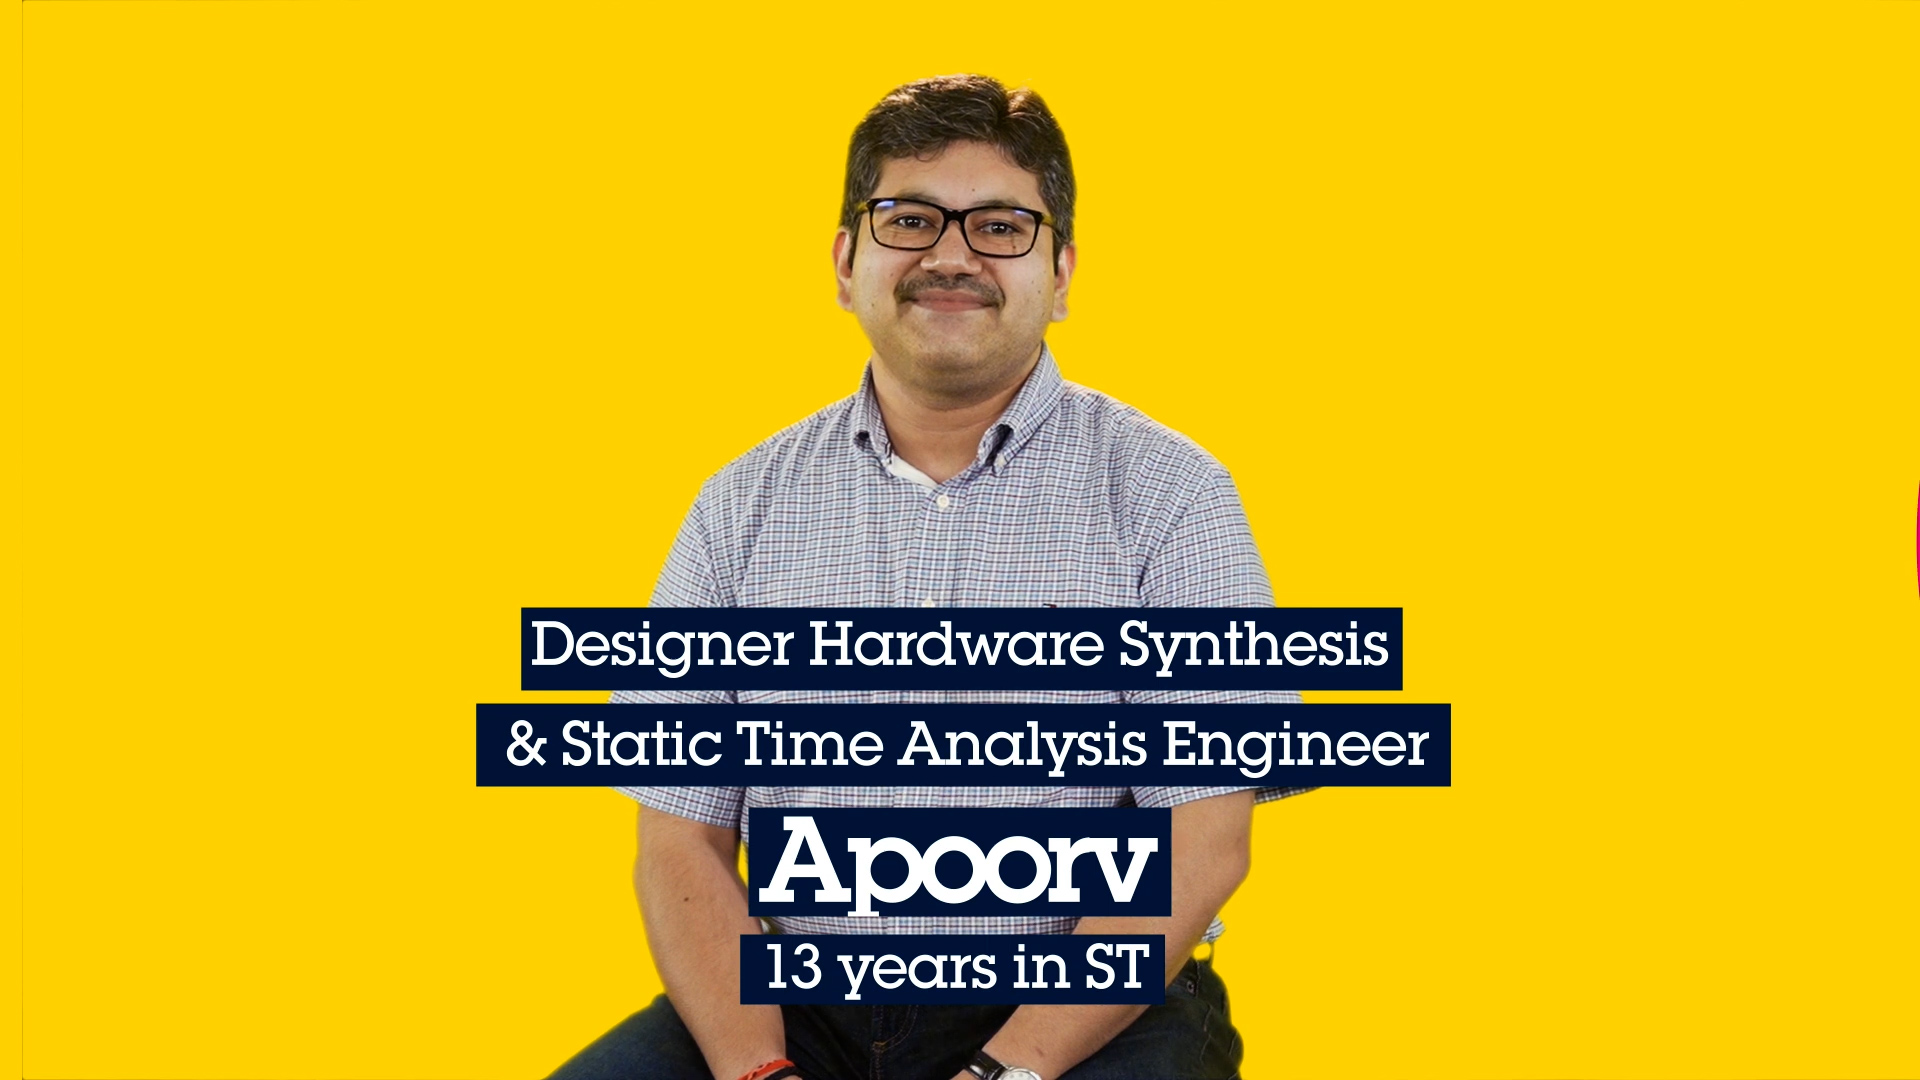 【ST Career】STMicroelectronics Apoorv - Designer Hardware Synthesis